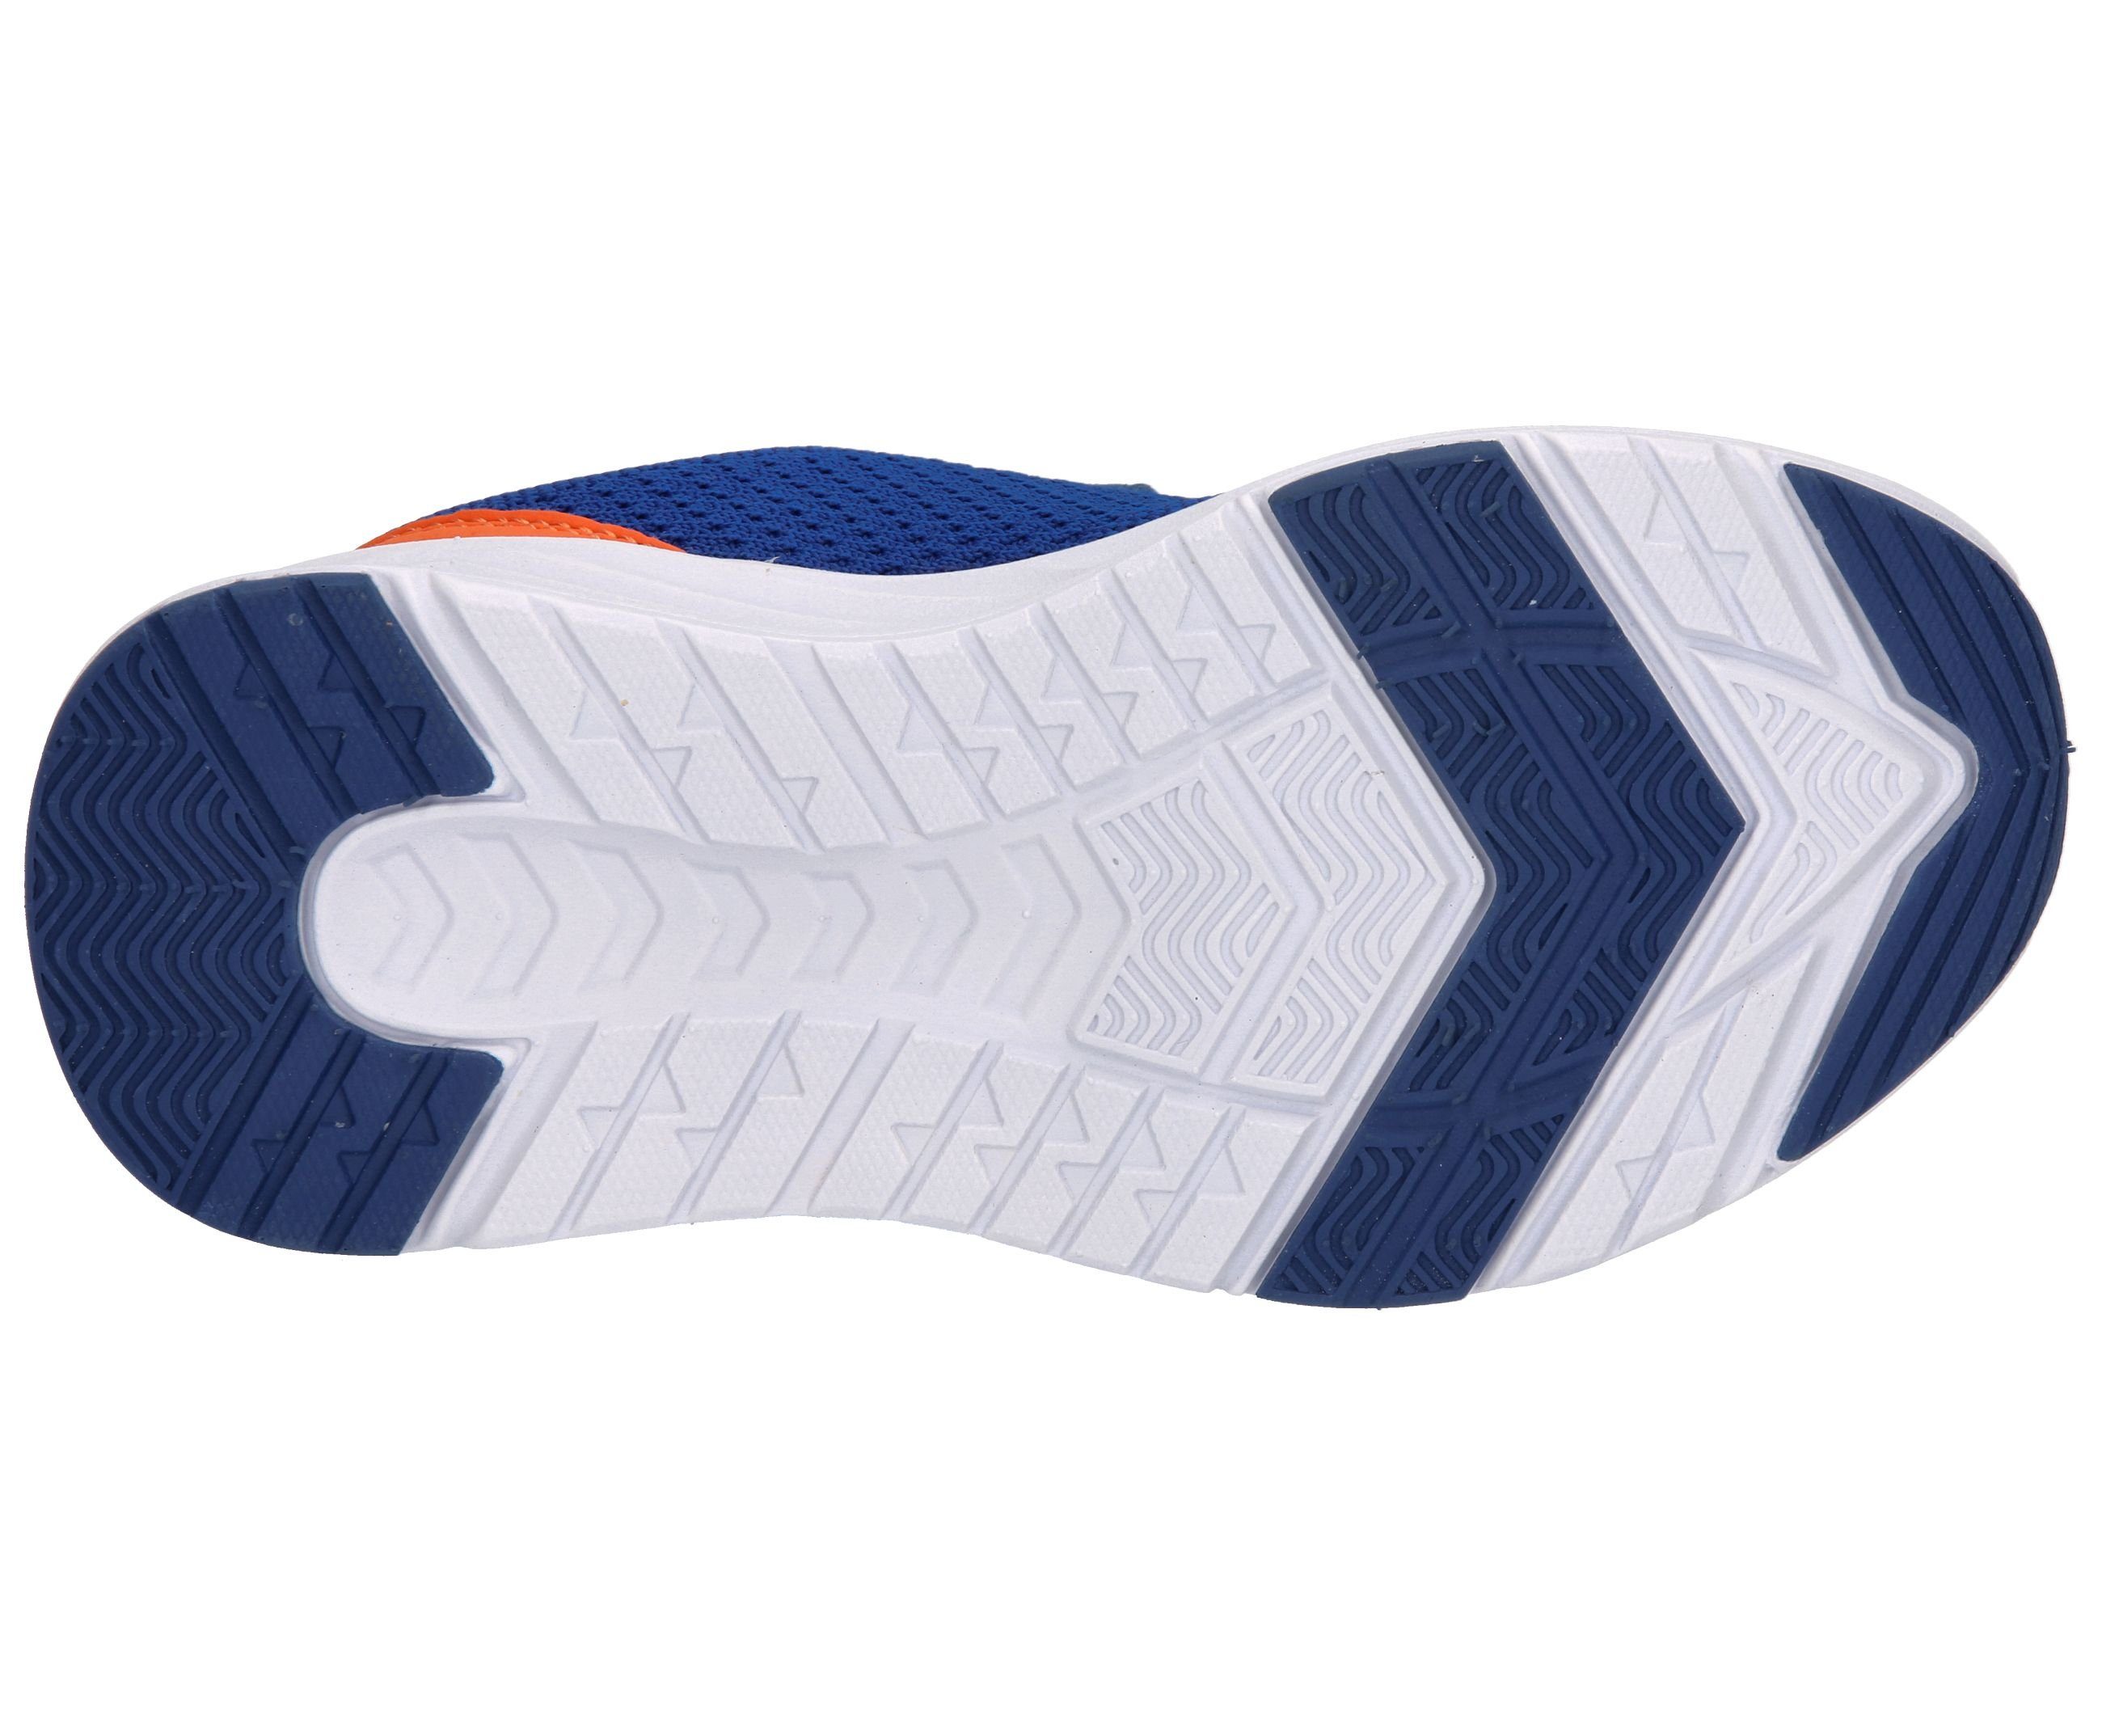 VS blau/orange Lico Sneaker Freizeitschuh Marin